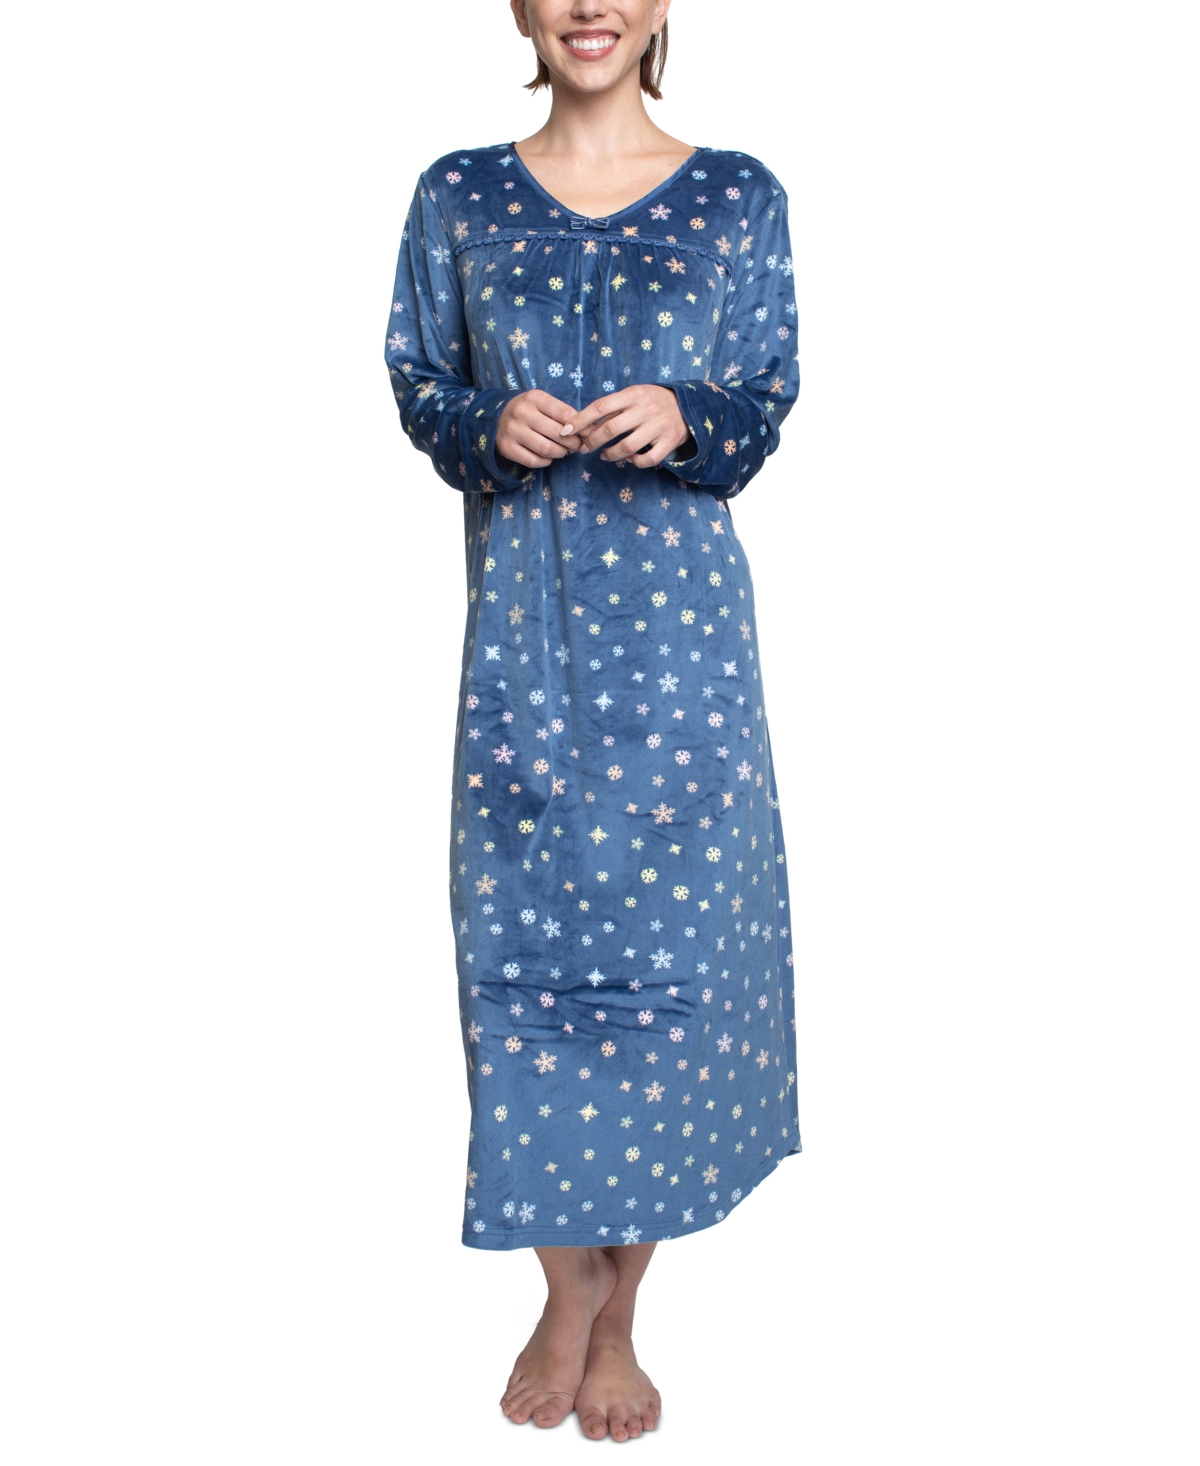 Women's Printed V-Neck Velour Nightgown - Stars